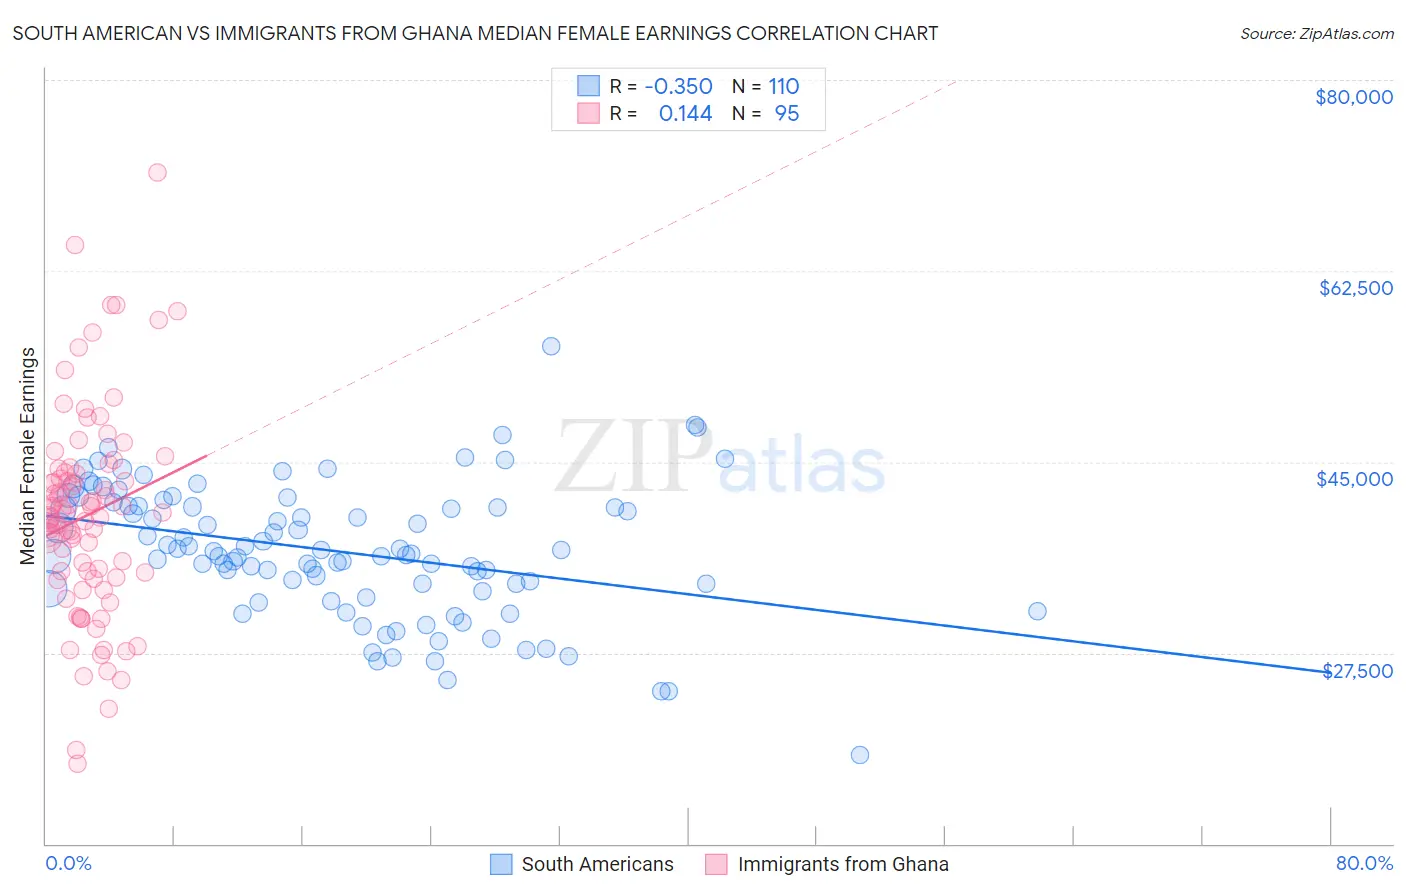 South American vs Immigrants from Ghana Median Female Earnings